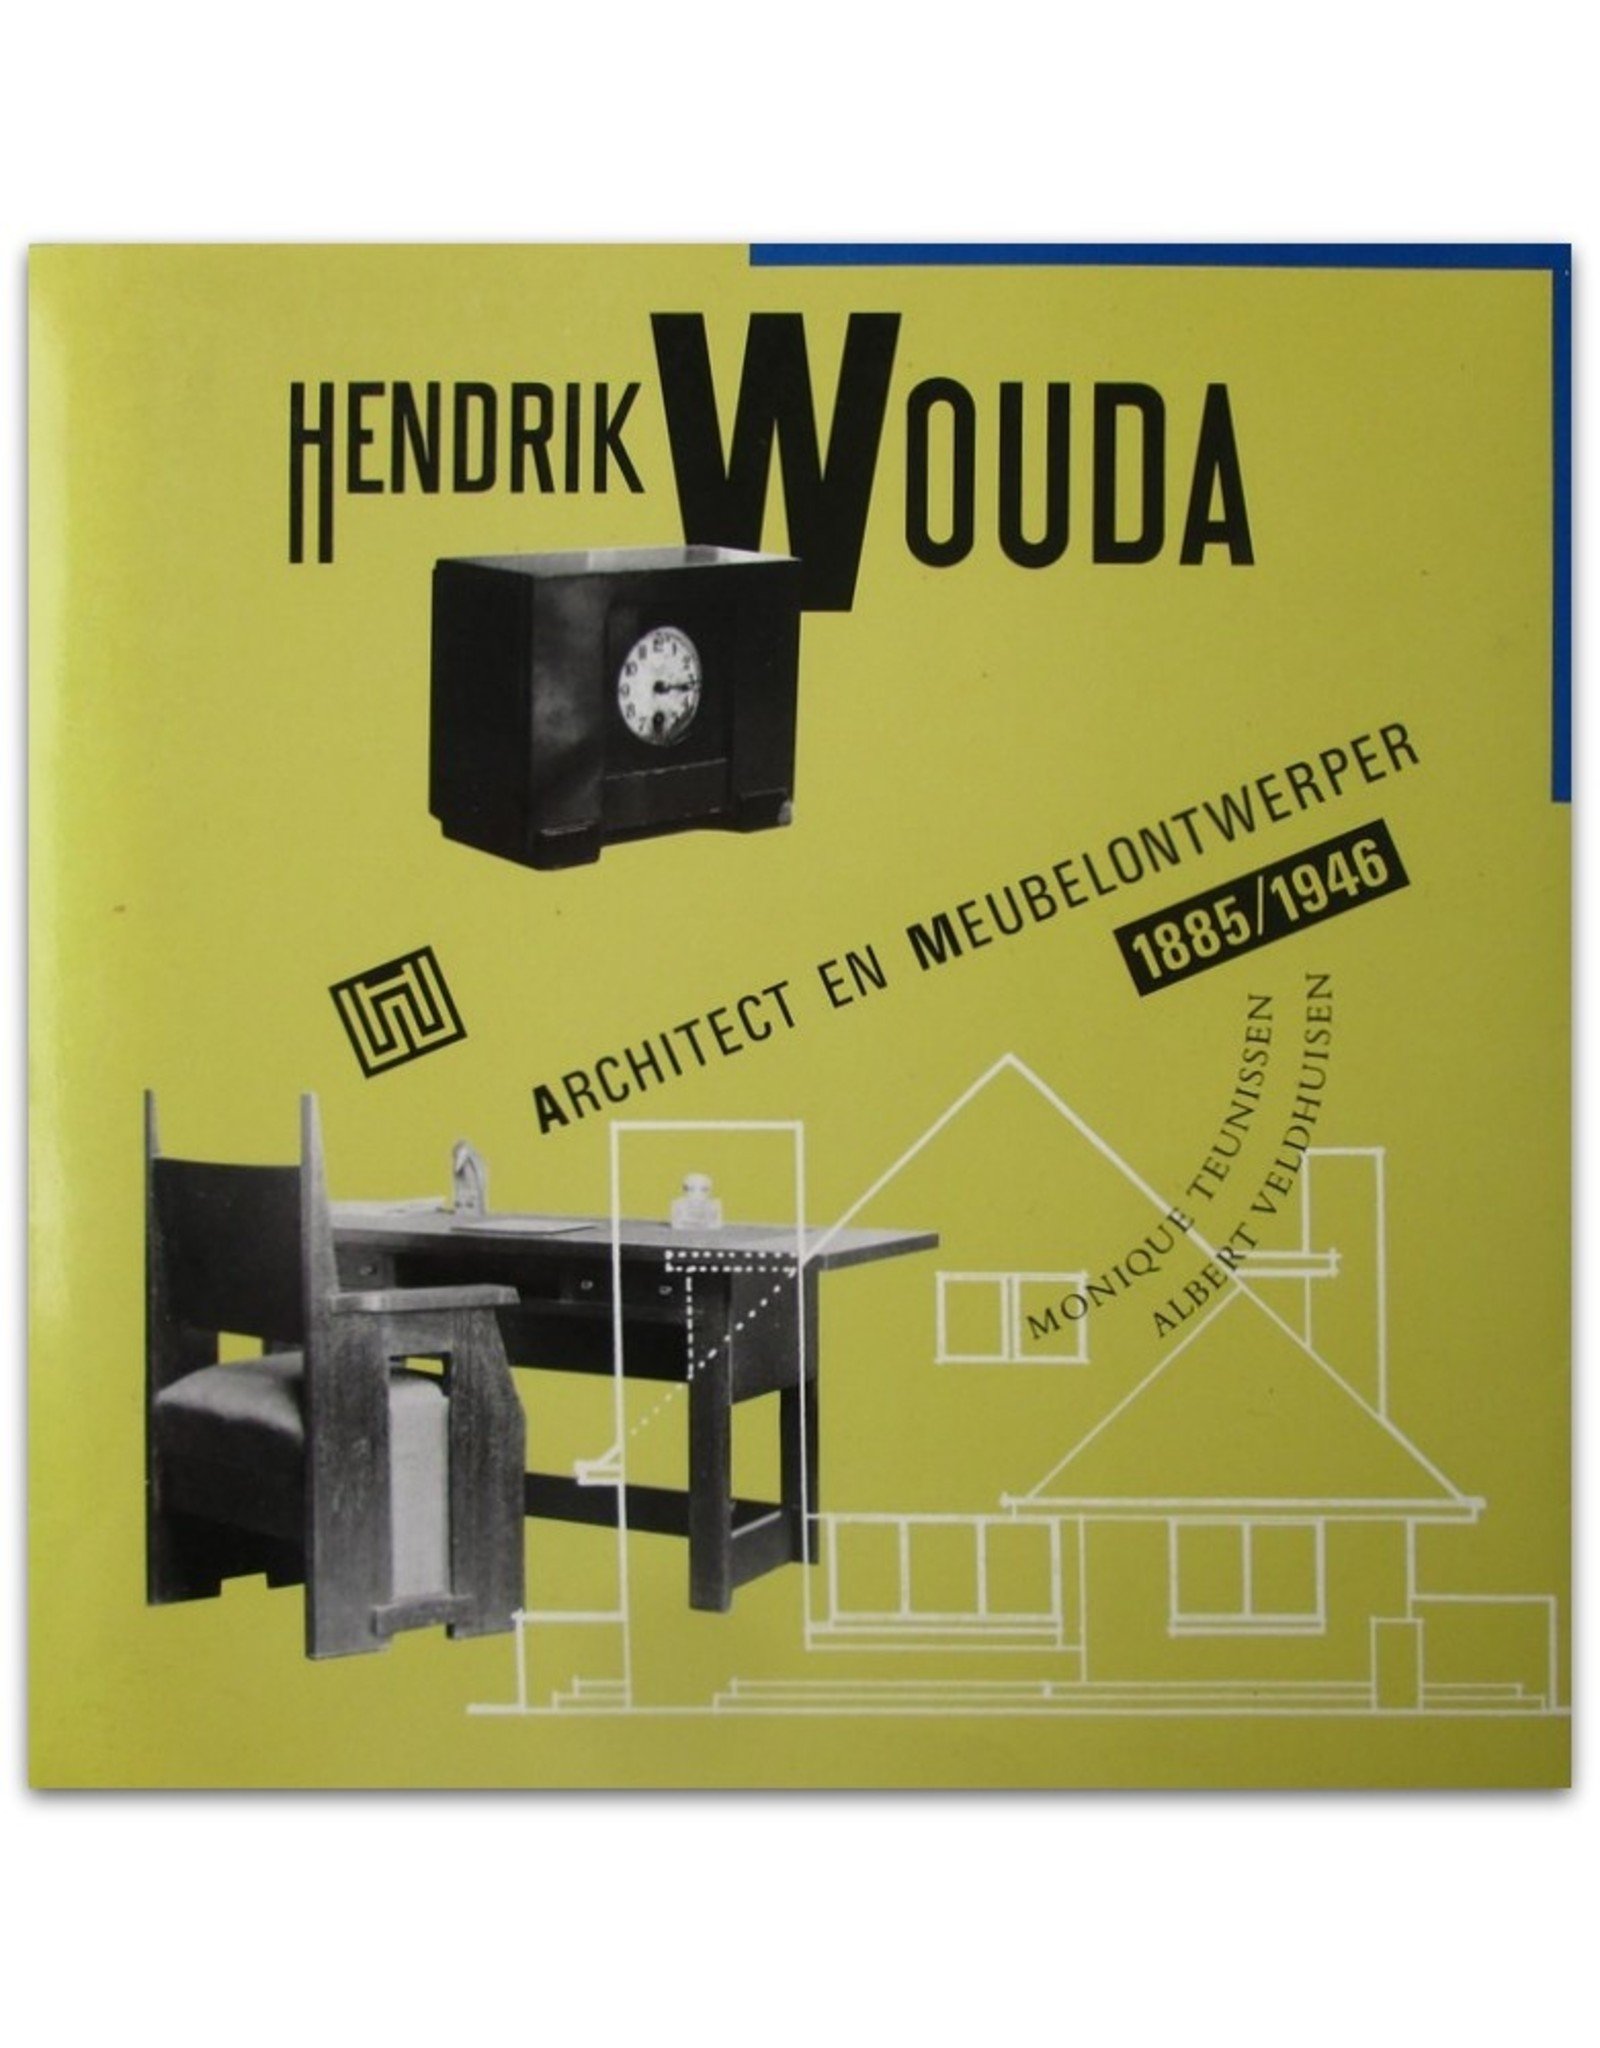 Hendrik Wouda: Architect en meubelontwerper (1885-1946)